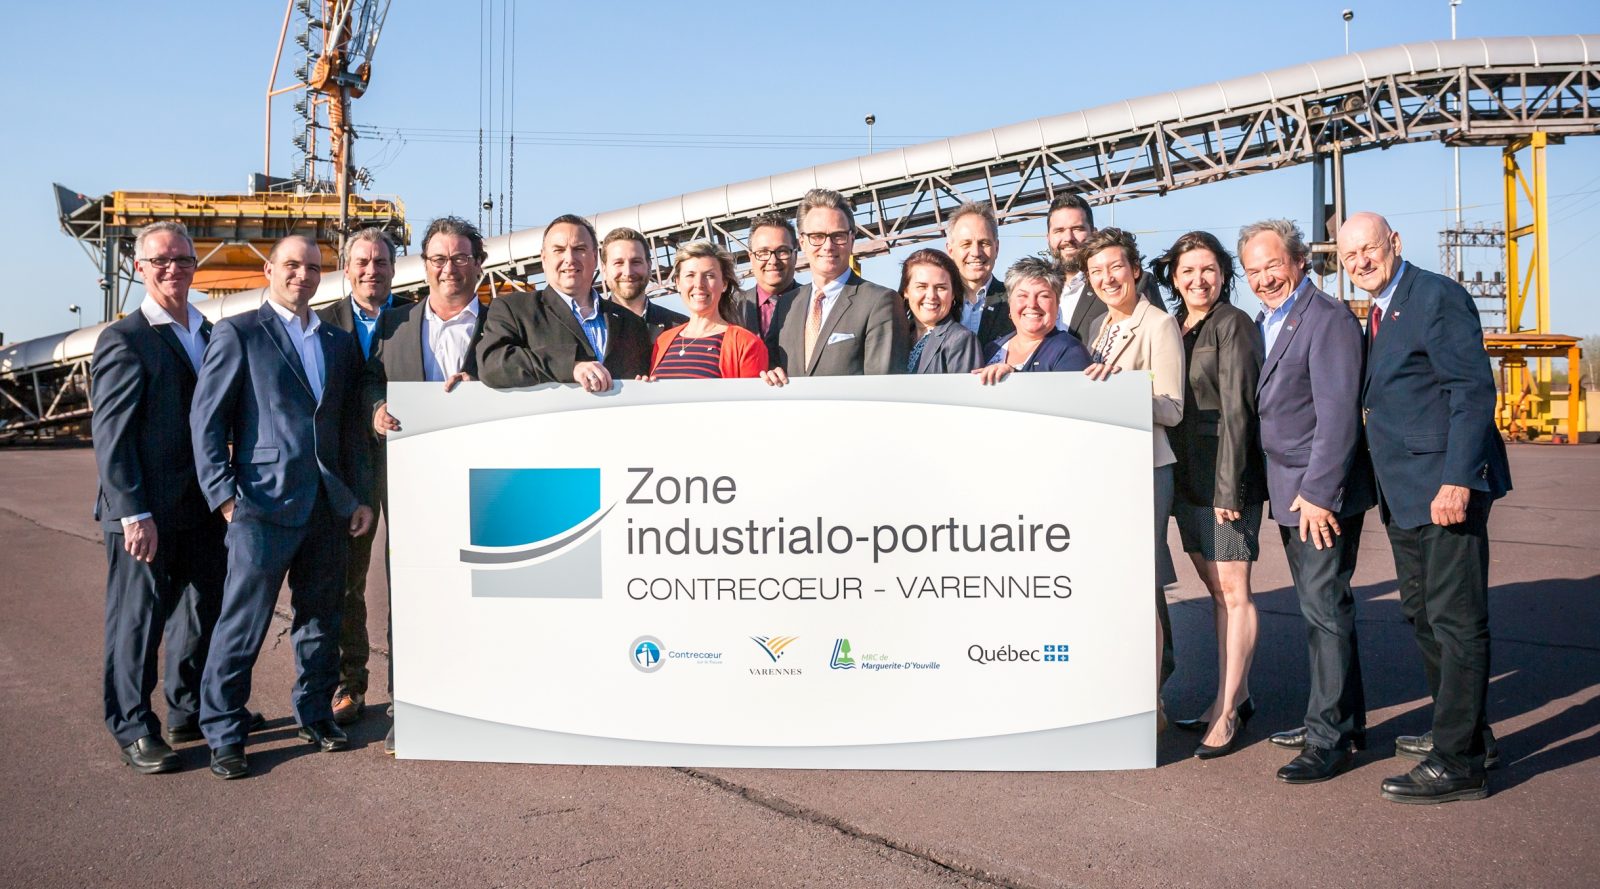 La Zone industrialo-portuaire (Zone IP) Contrecoeur-Varennes présente son image de marque